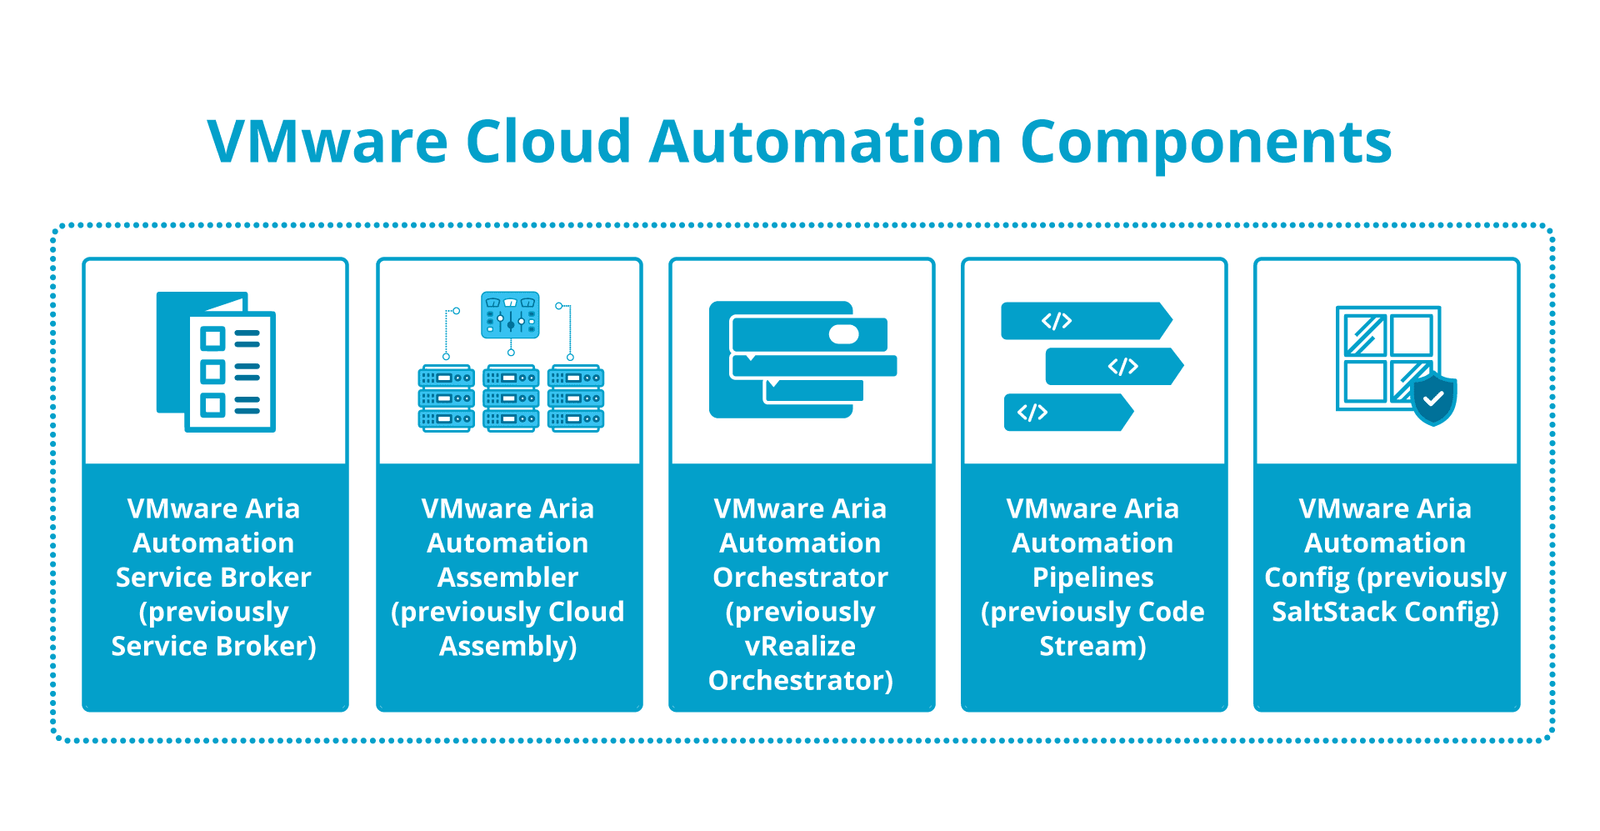 VMware cloud automation components.